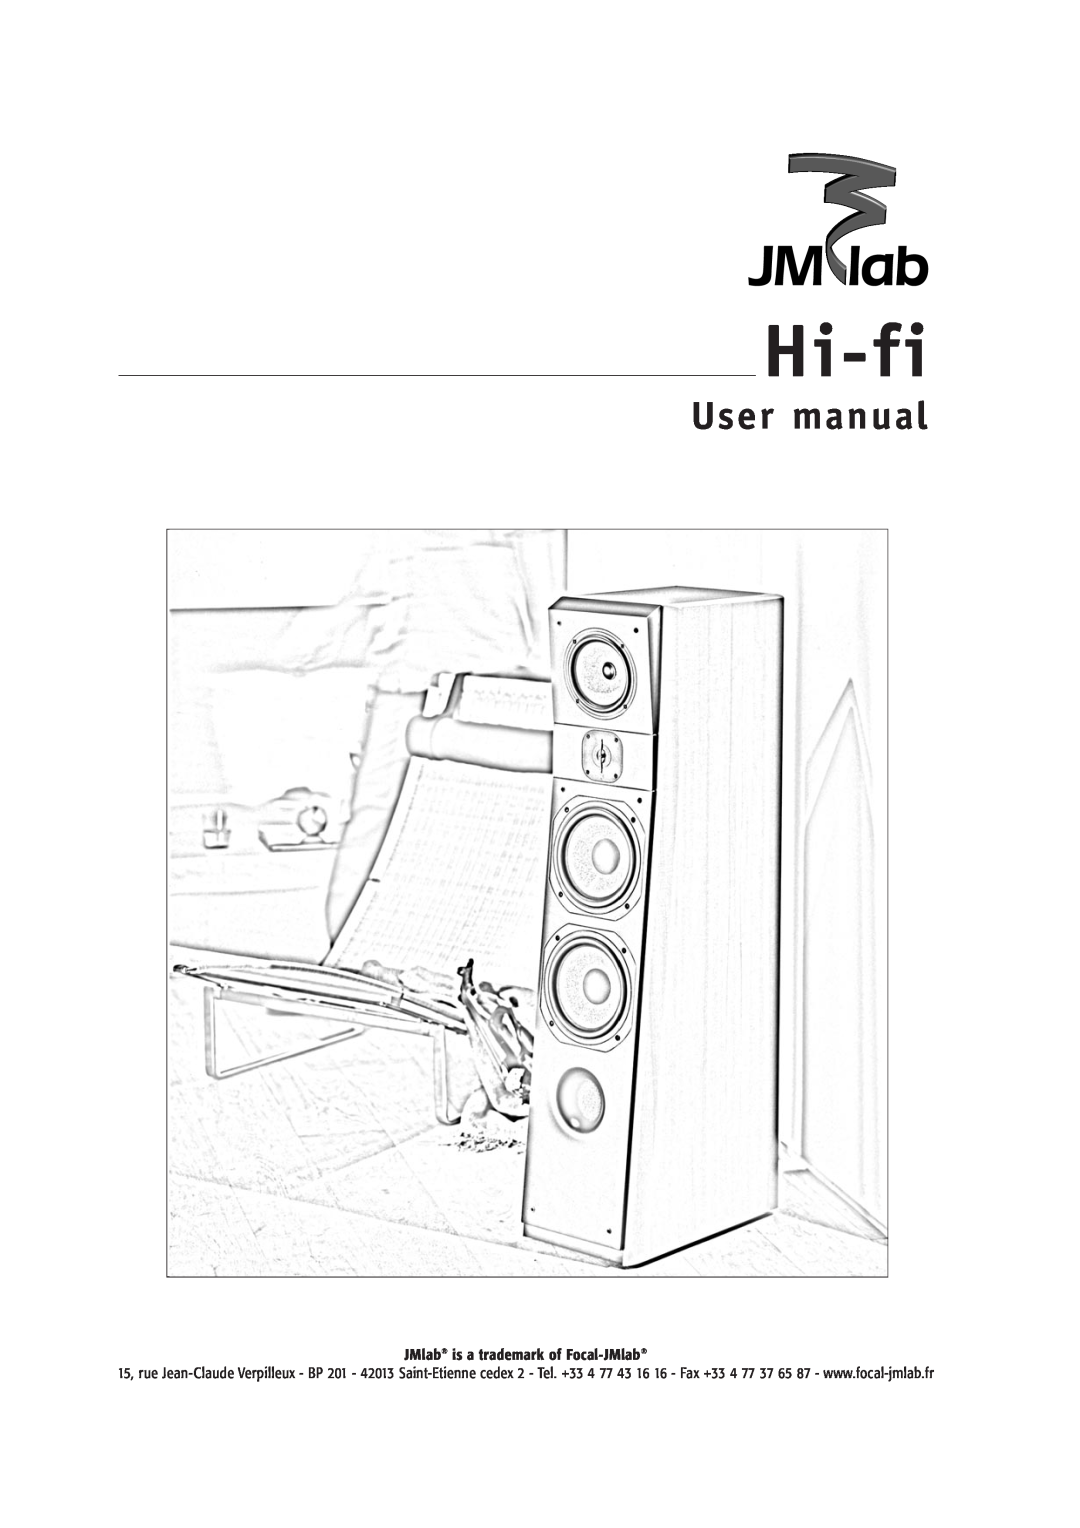 Focal Hi-fi manual JMlab is a trademark of Focal-JMlab 